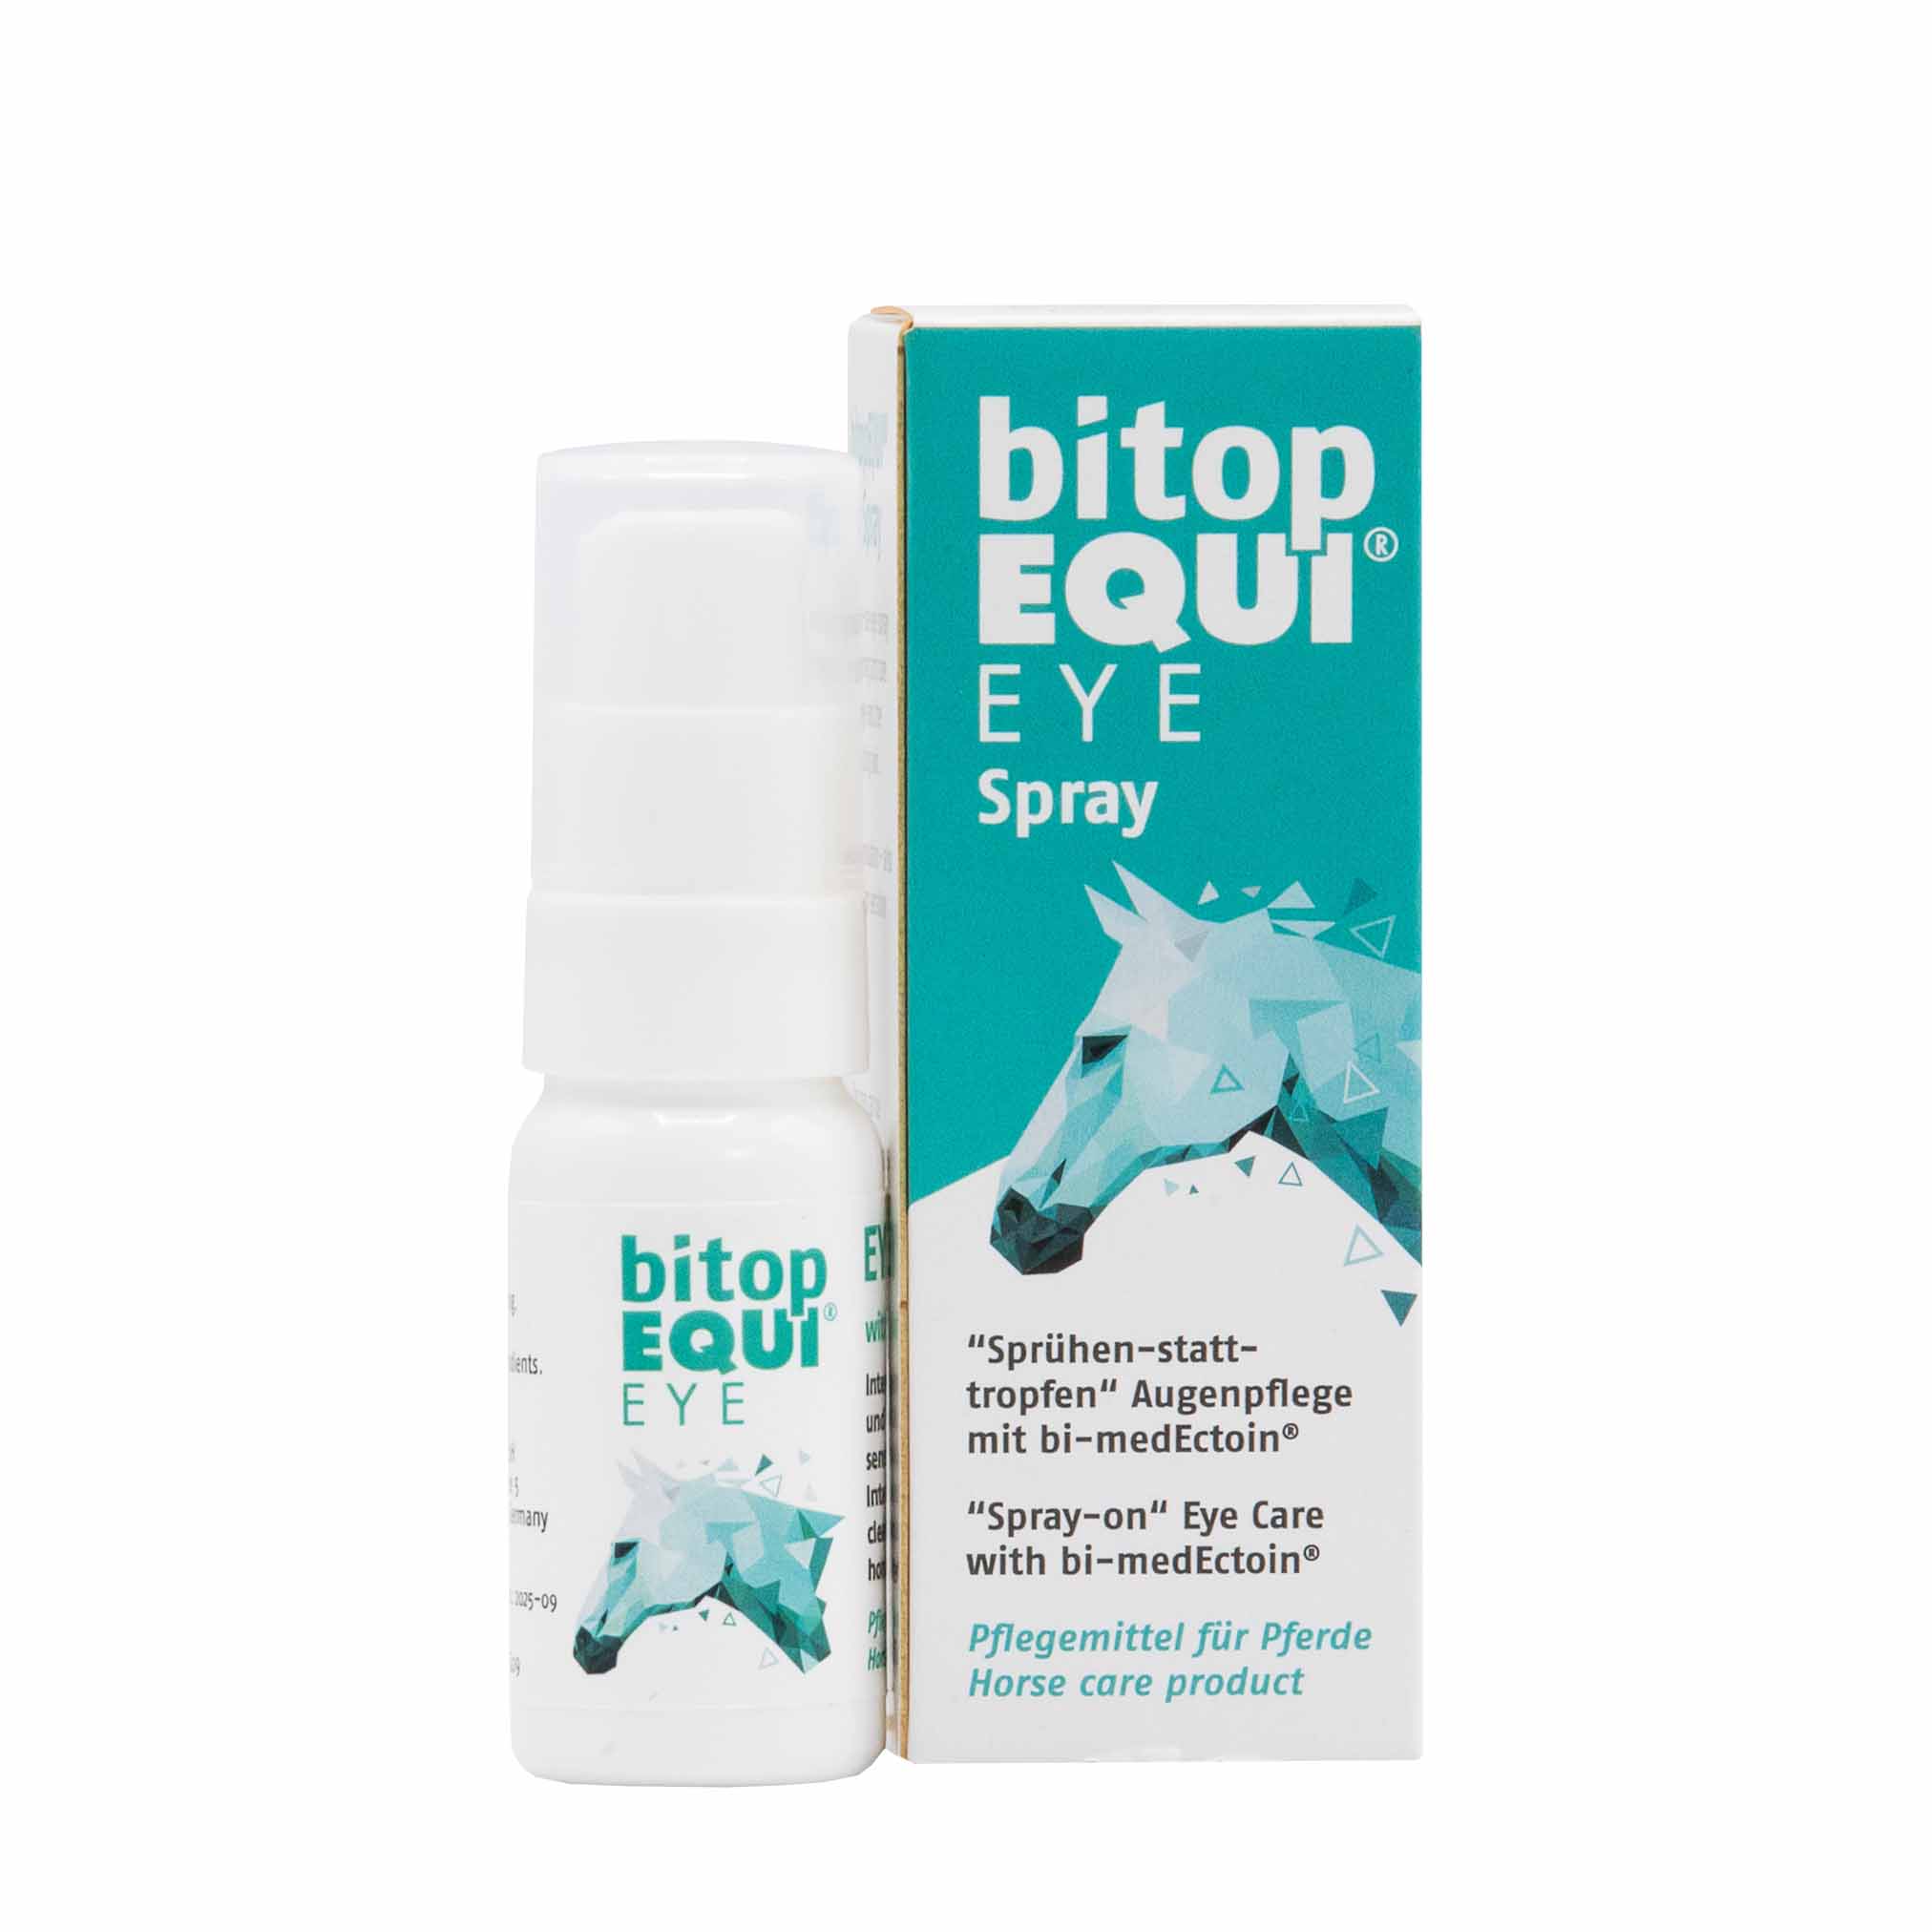 bitopequi®-eye-spray